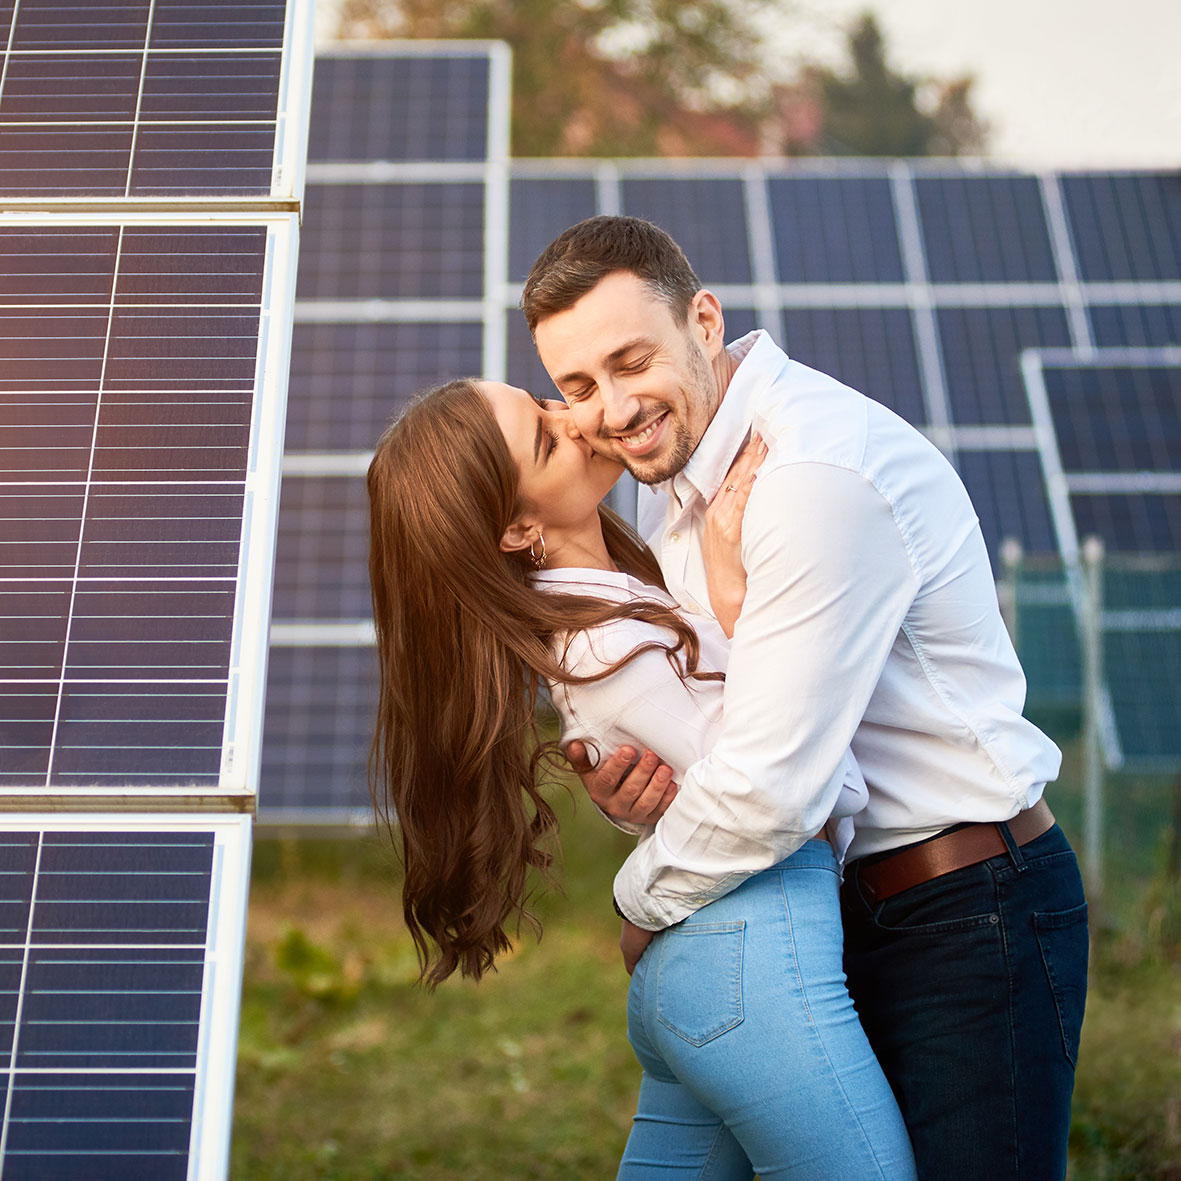 web-loving-couple-at-solar-farm-2022-05-20-20-34-09-utc